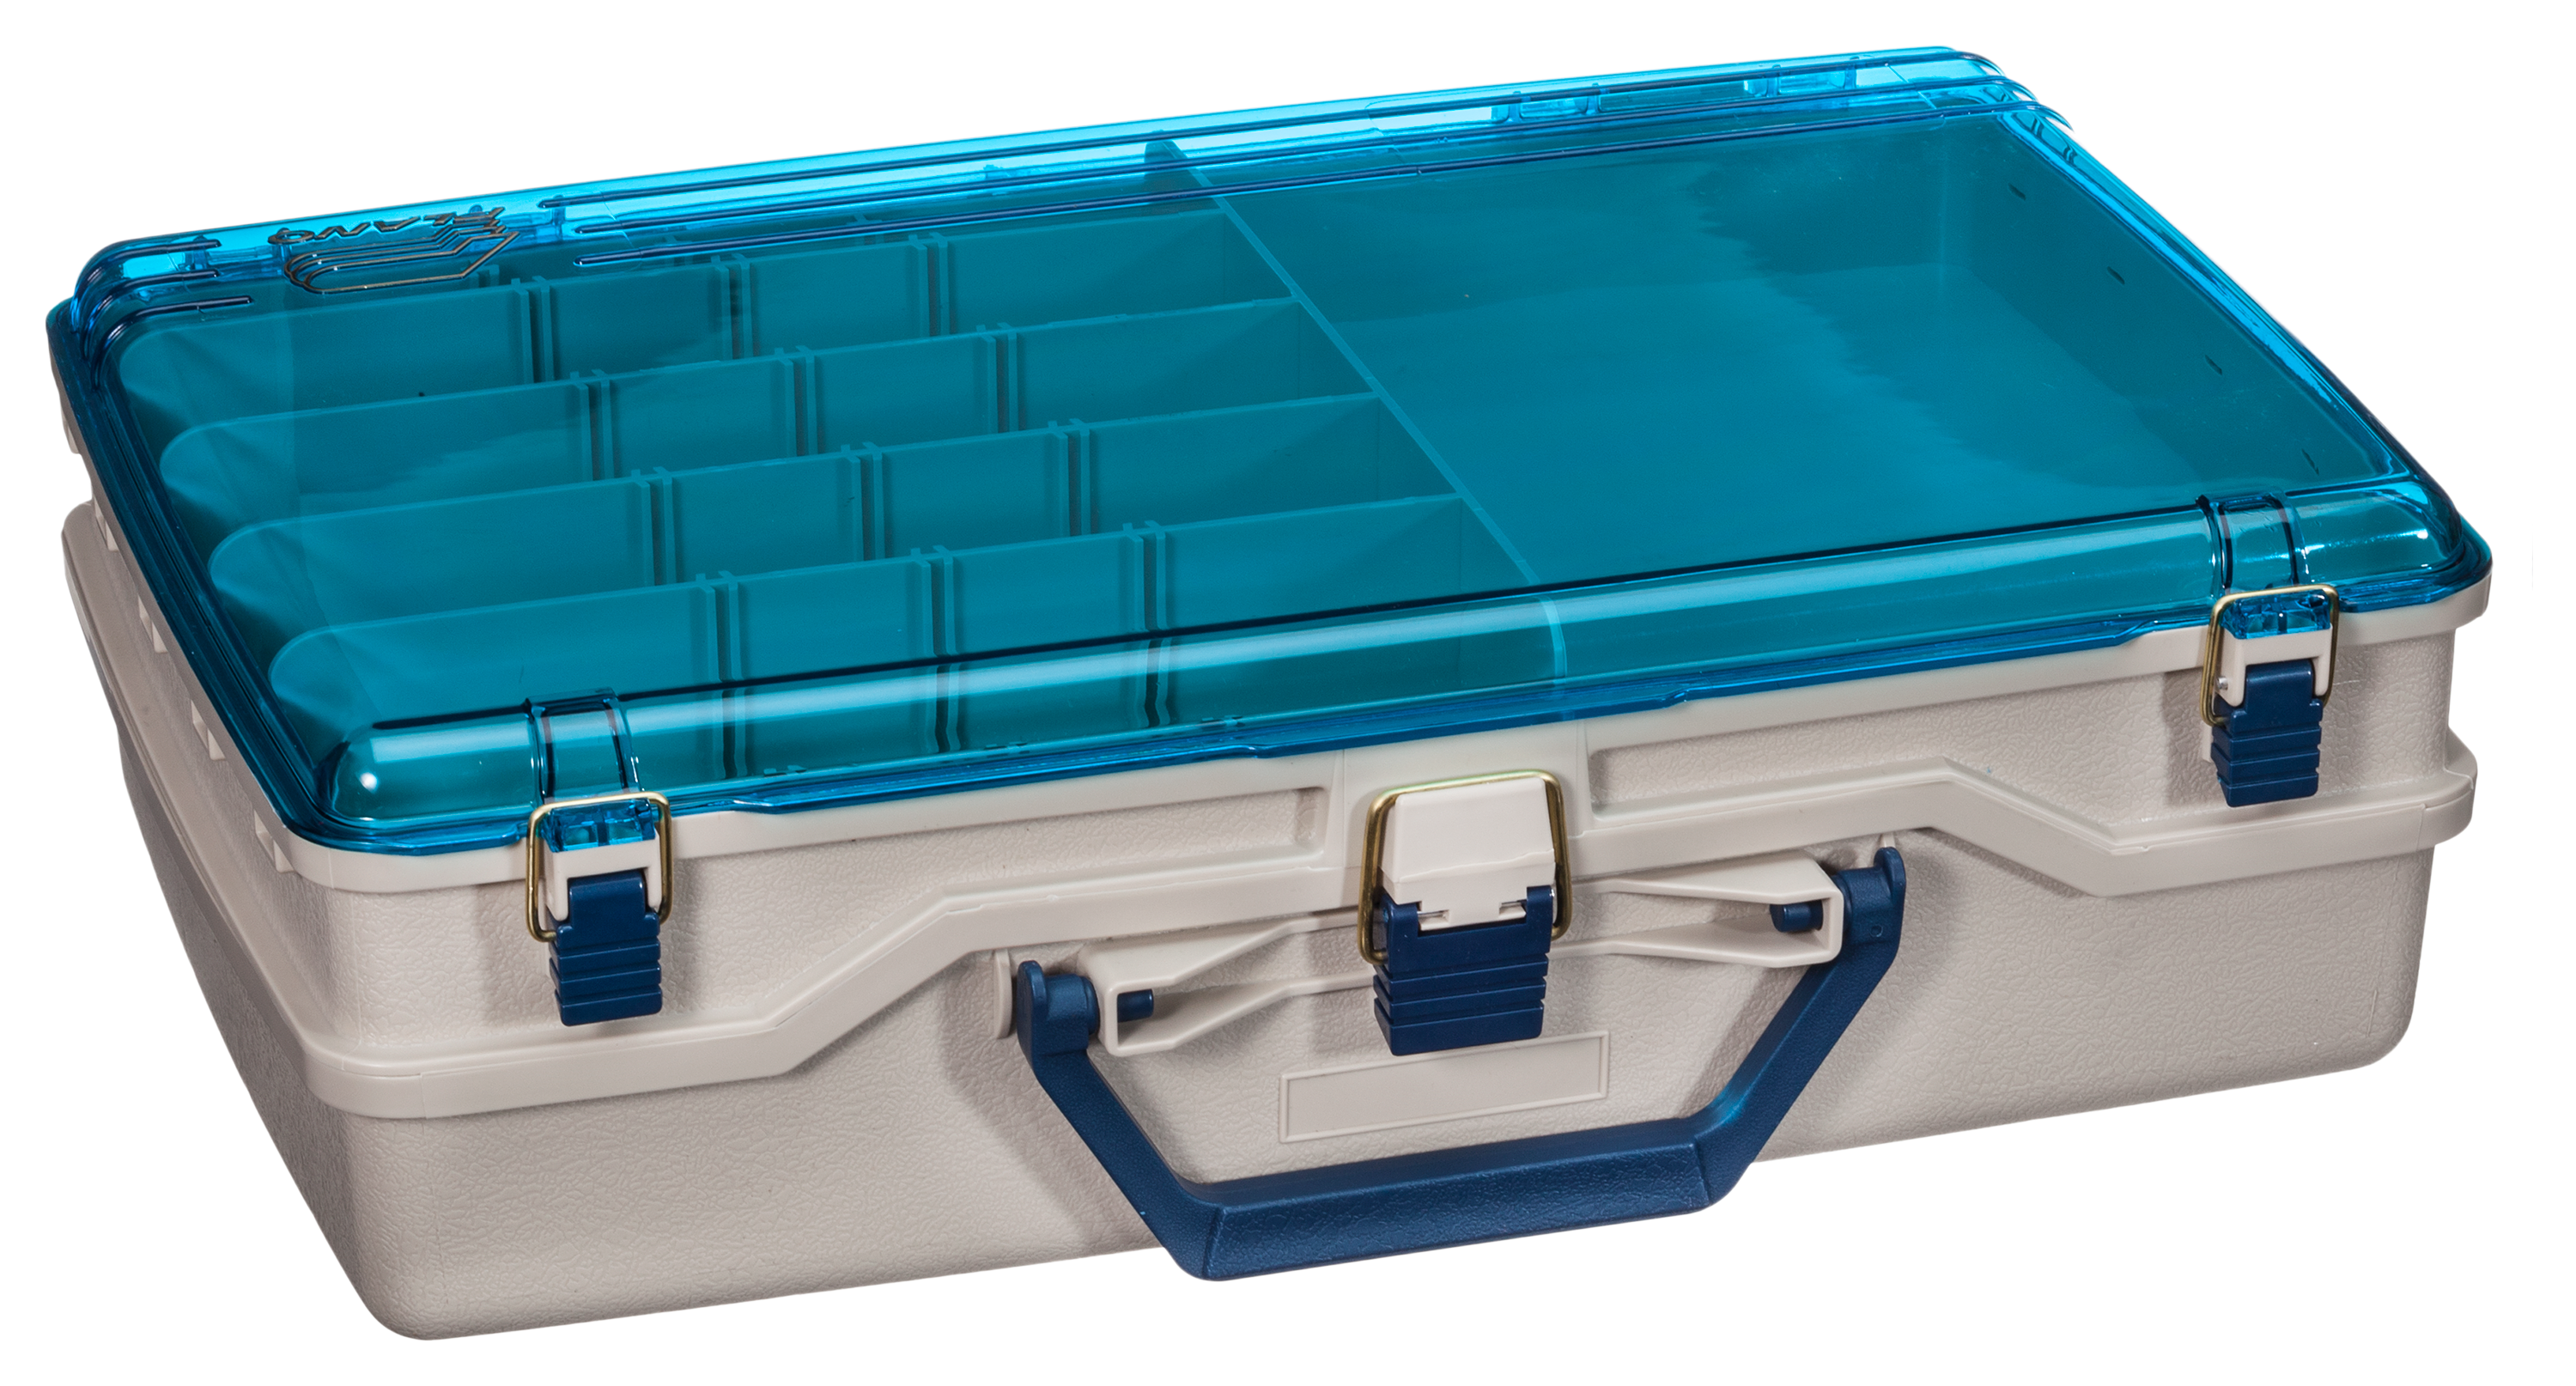 New Plano Fishing Tackle Box #758 4-Drawer System Blue/Silver USA Organizer